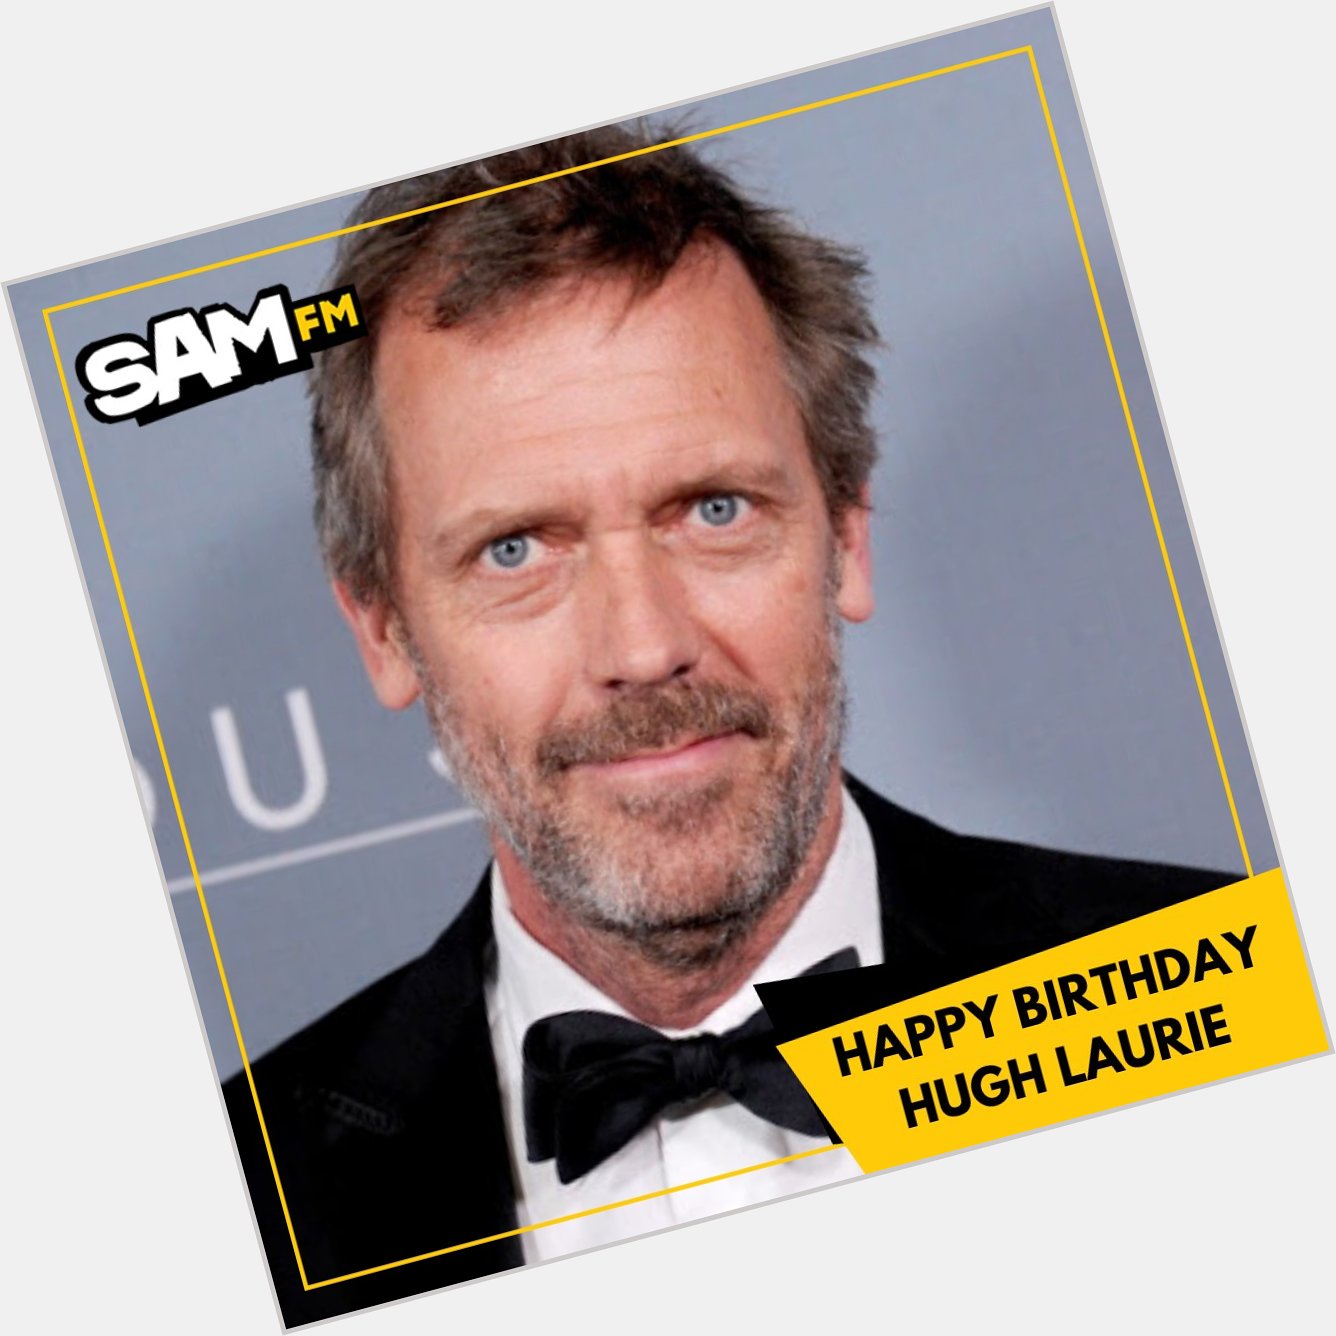 Wishing Hugh Laurie a happy 61st birthday! 